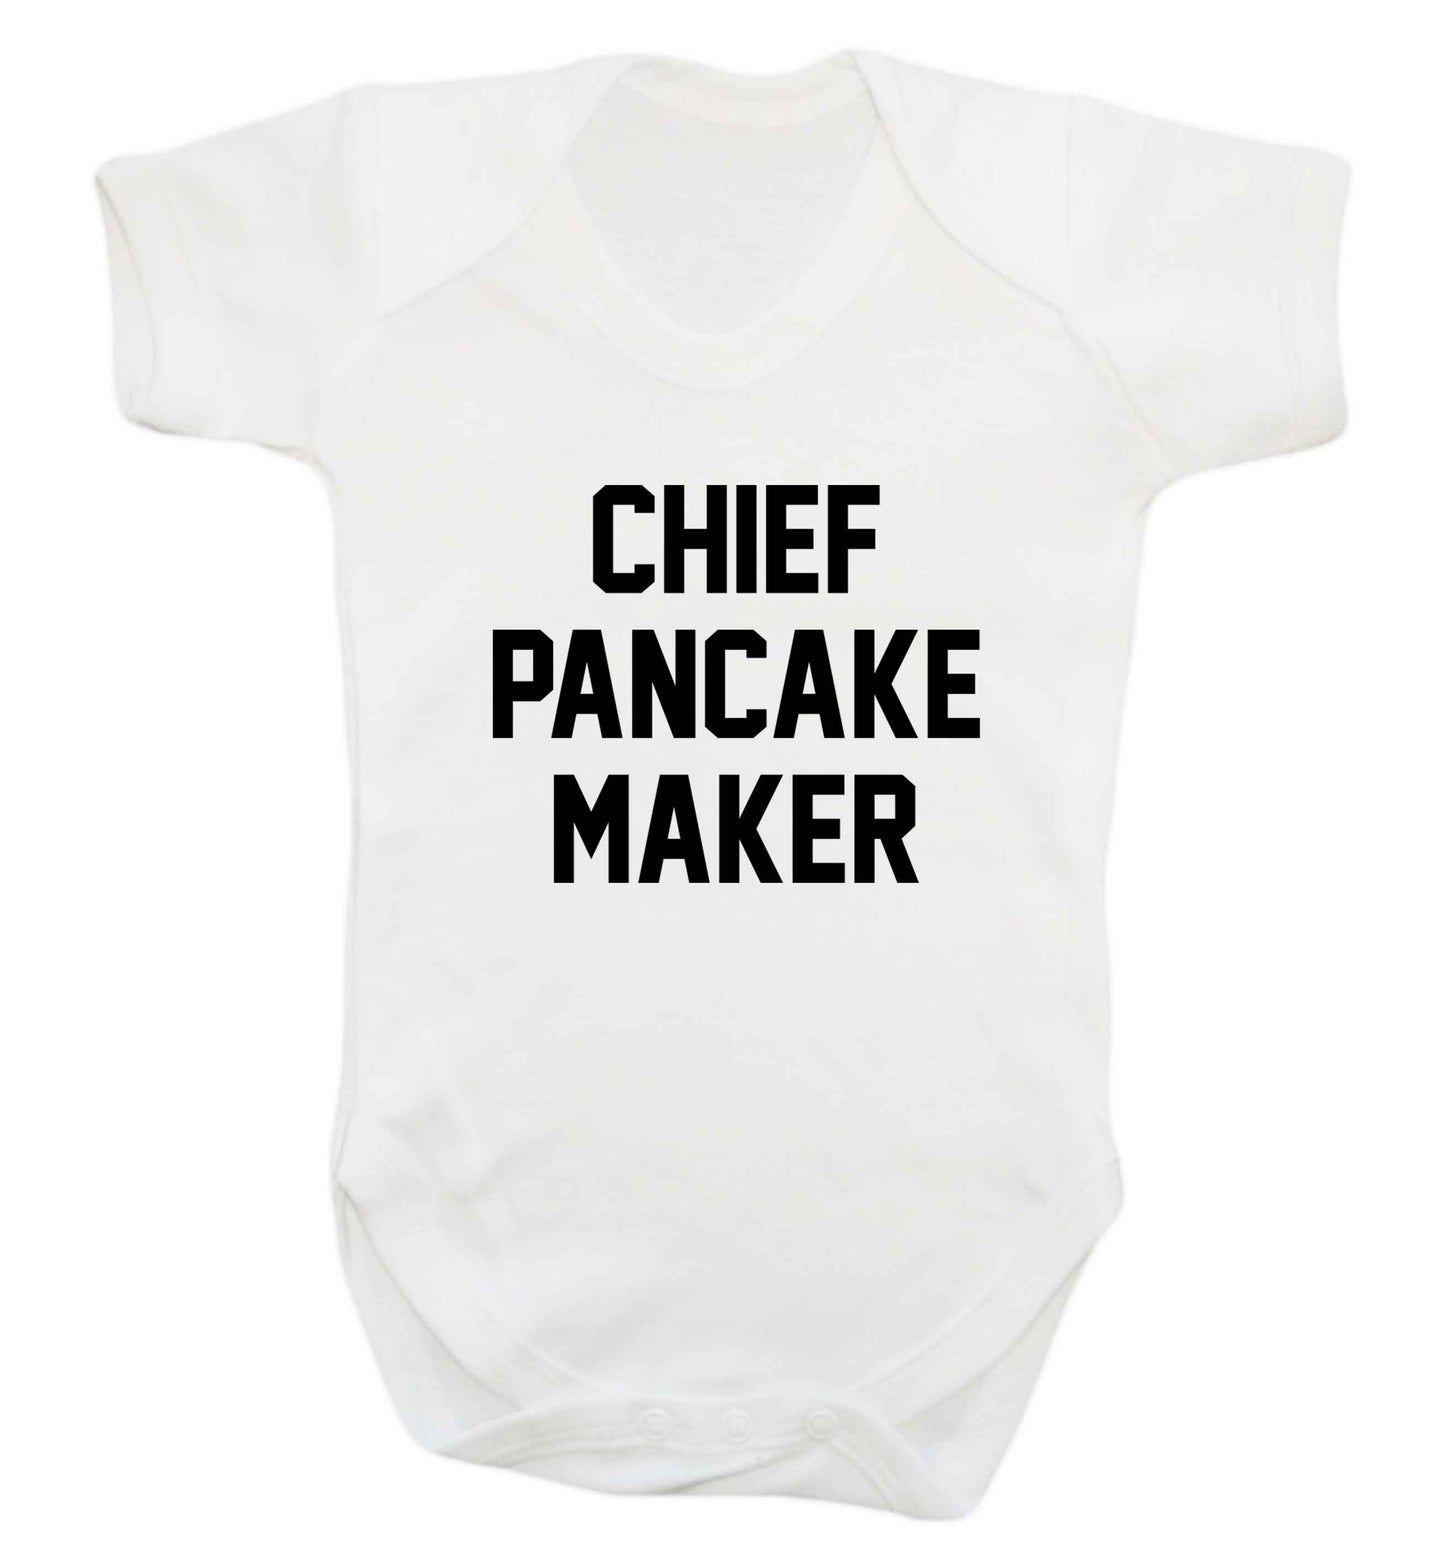 Chief pancake maker baby vest white 18-24 months